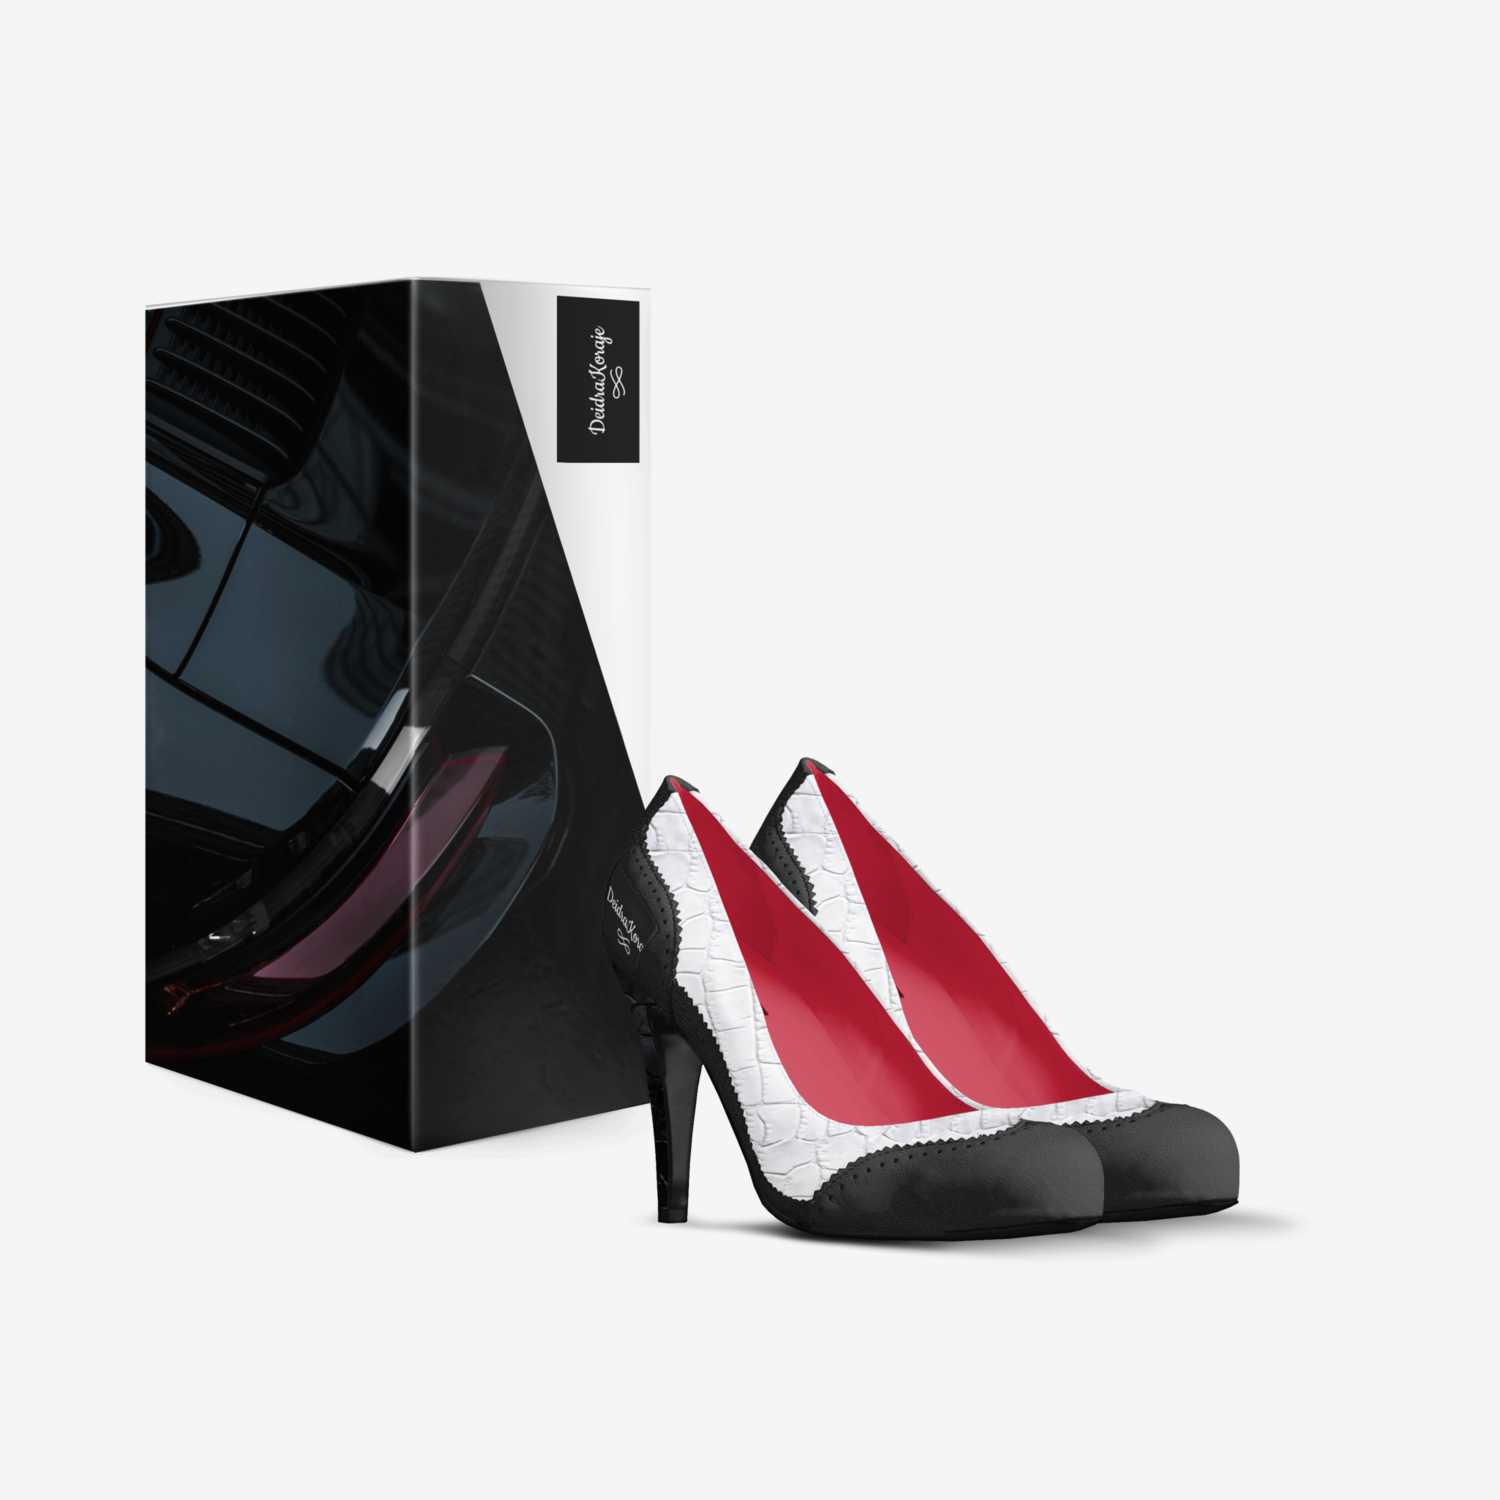 Koraje custom made in Italy shoes by Deidra Sharp | Box view